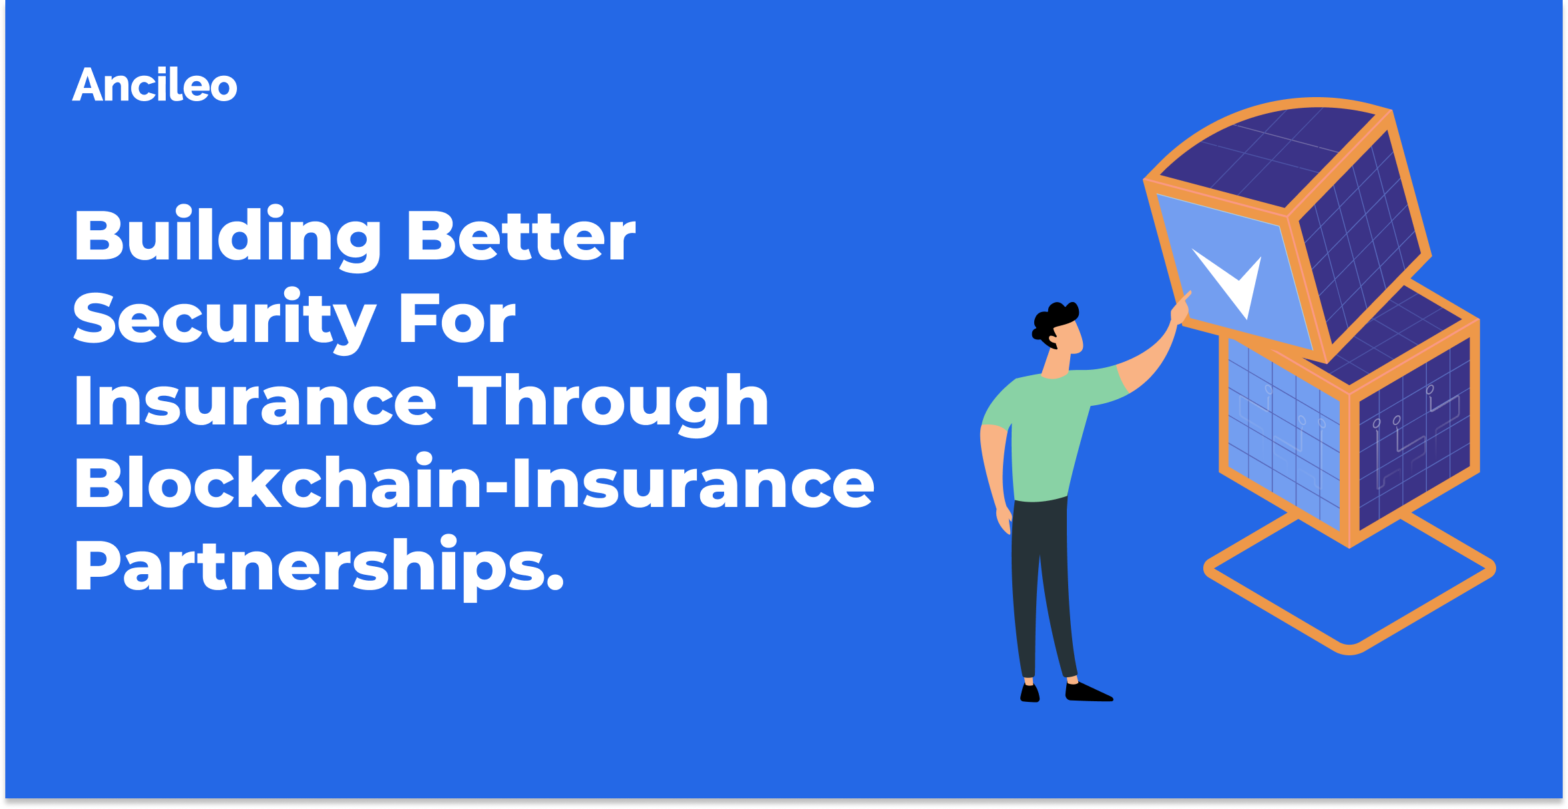 Building Better Security For Insurance Through Blockchain-Insurance Partnerships.